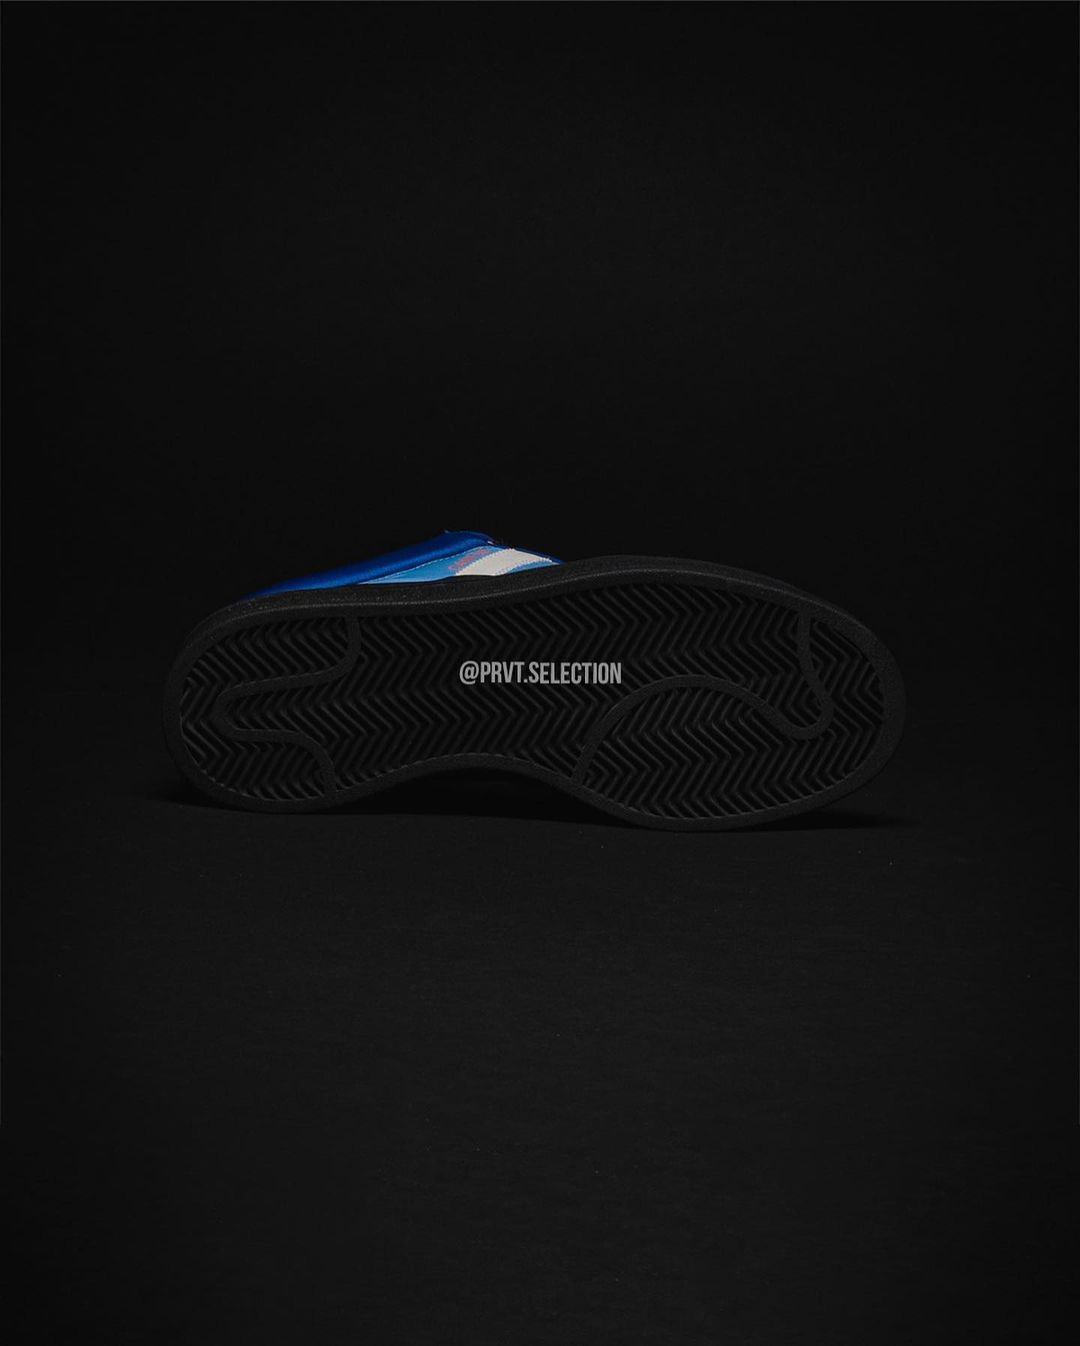 Bad Bunny × adidas Originals CAMPUS “Blue” (バッド・バニー アディダス オリジナルス キャンパス “ブルー”)